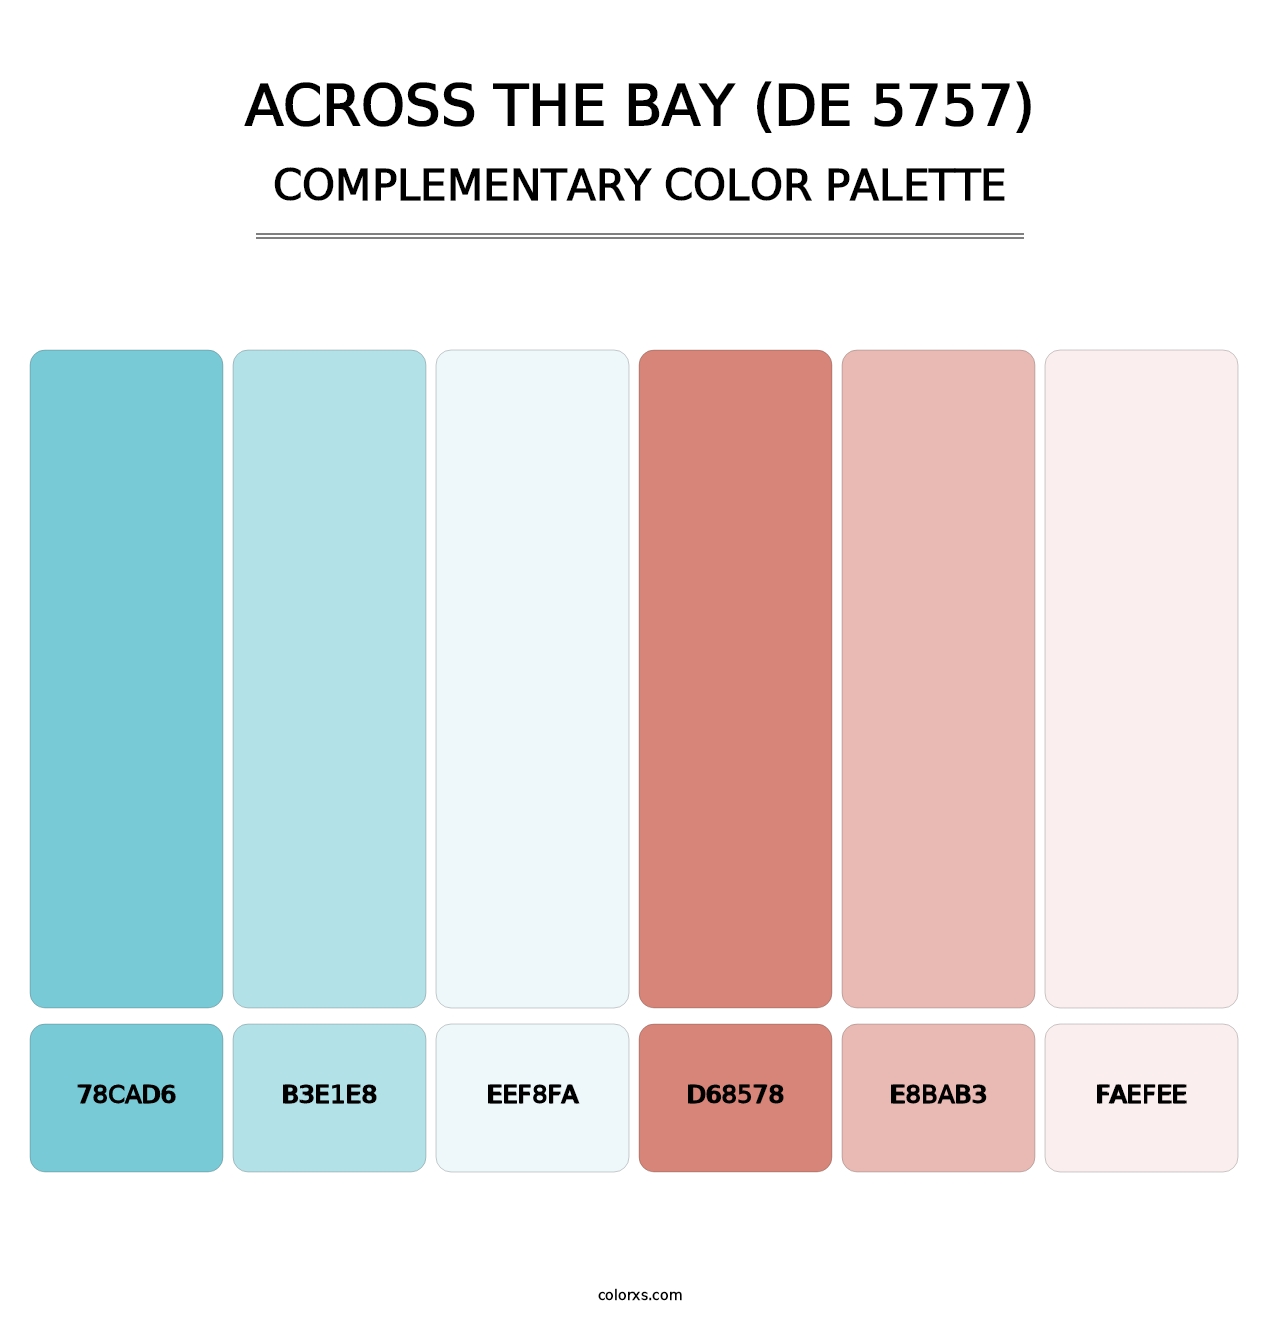 Across the Bay (DE 5757) - Complementary Color Palette